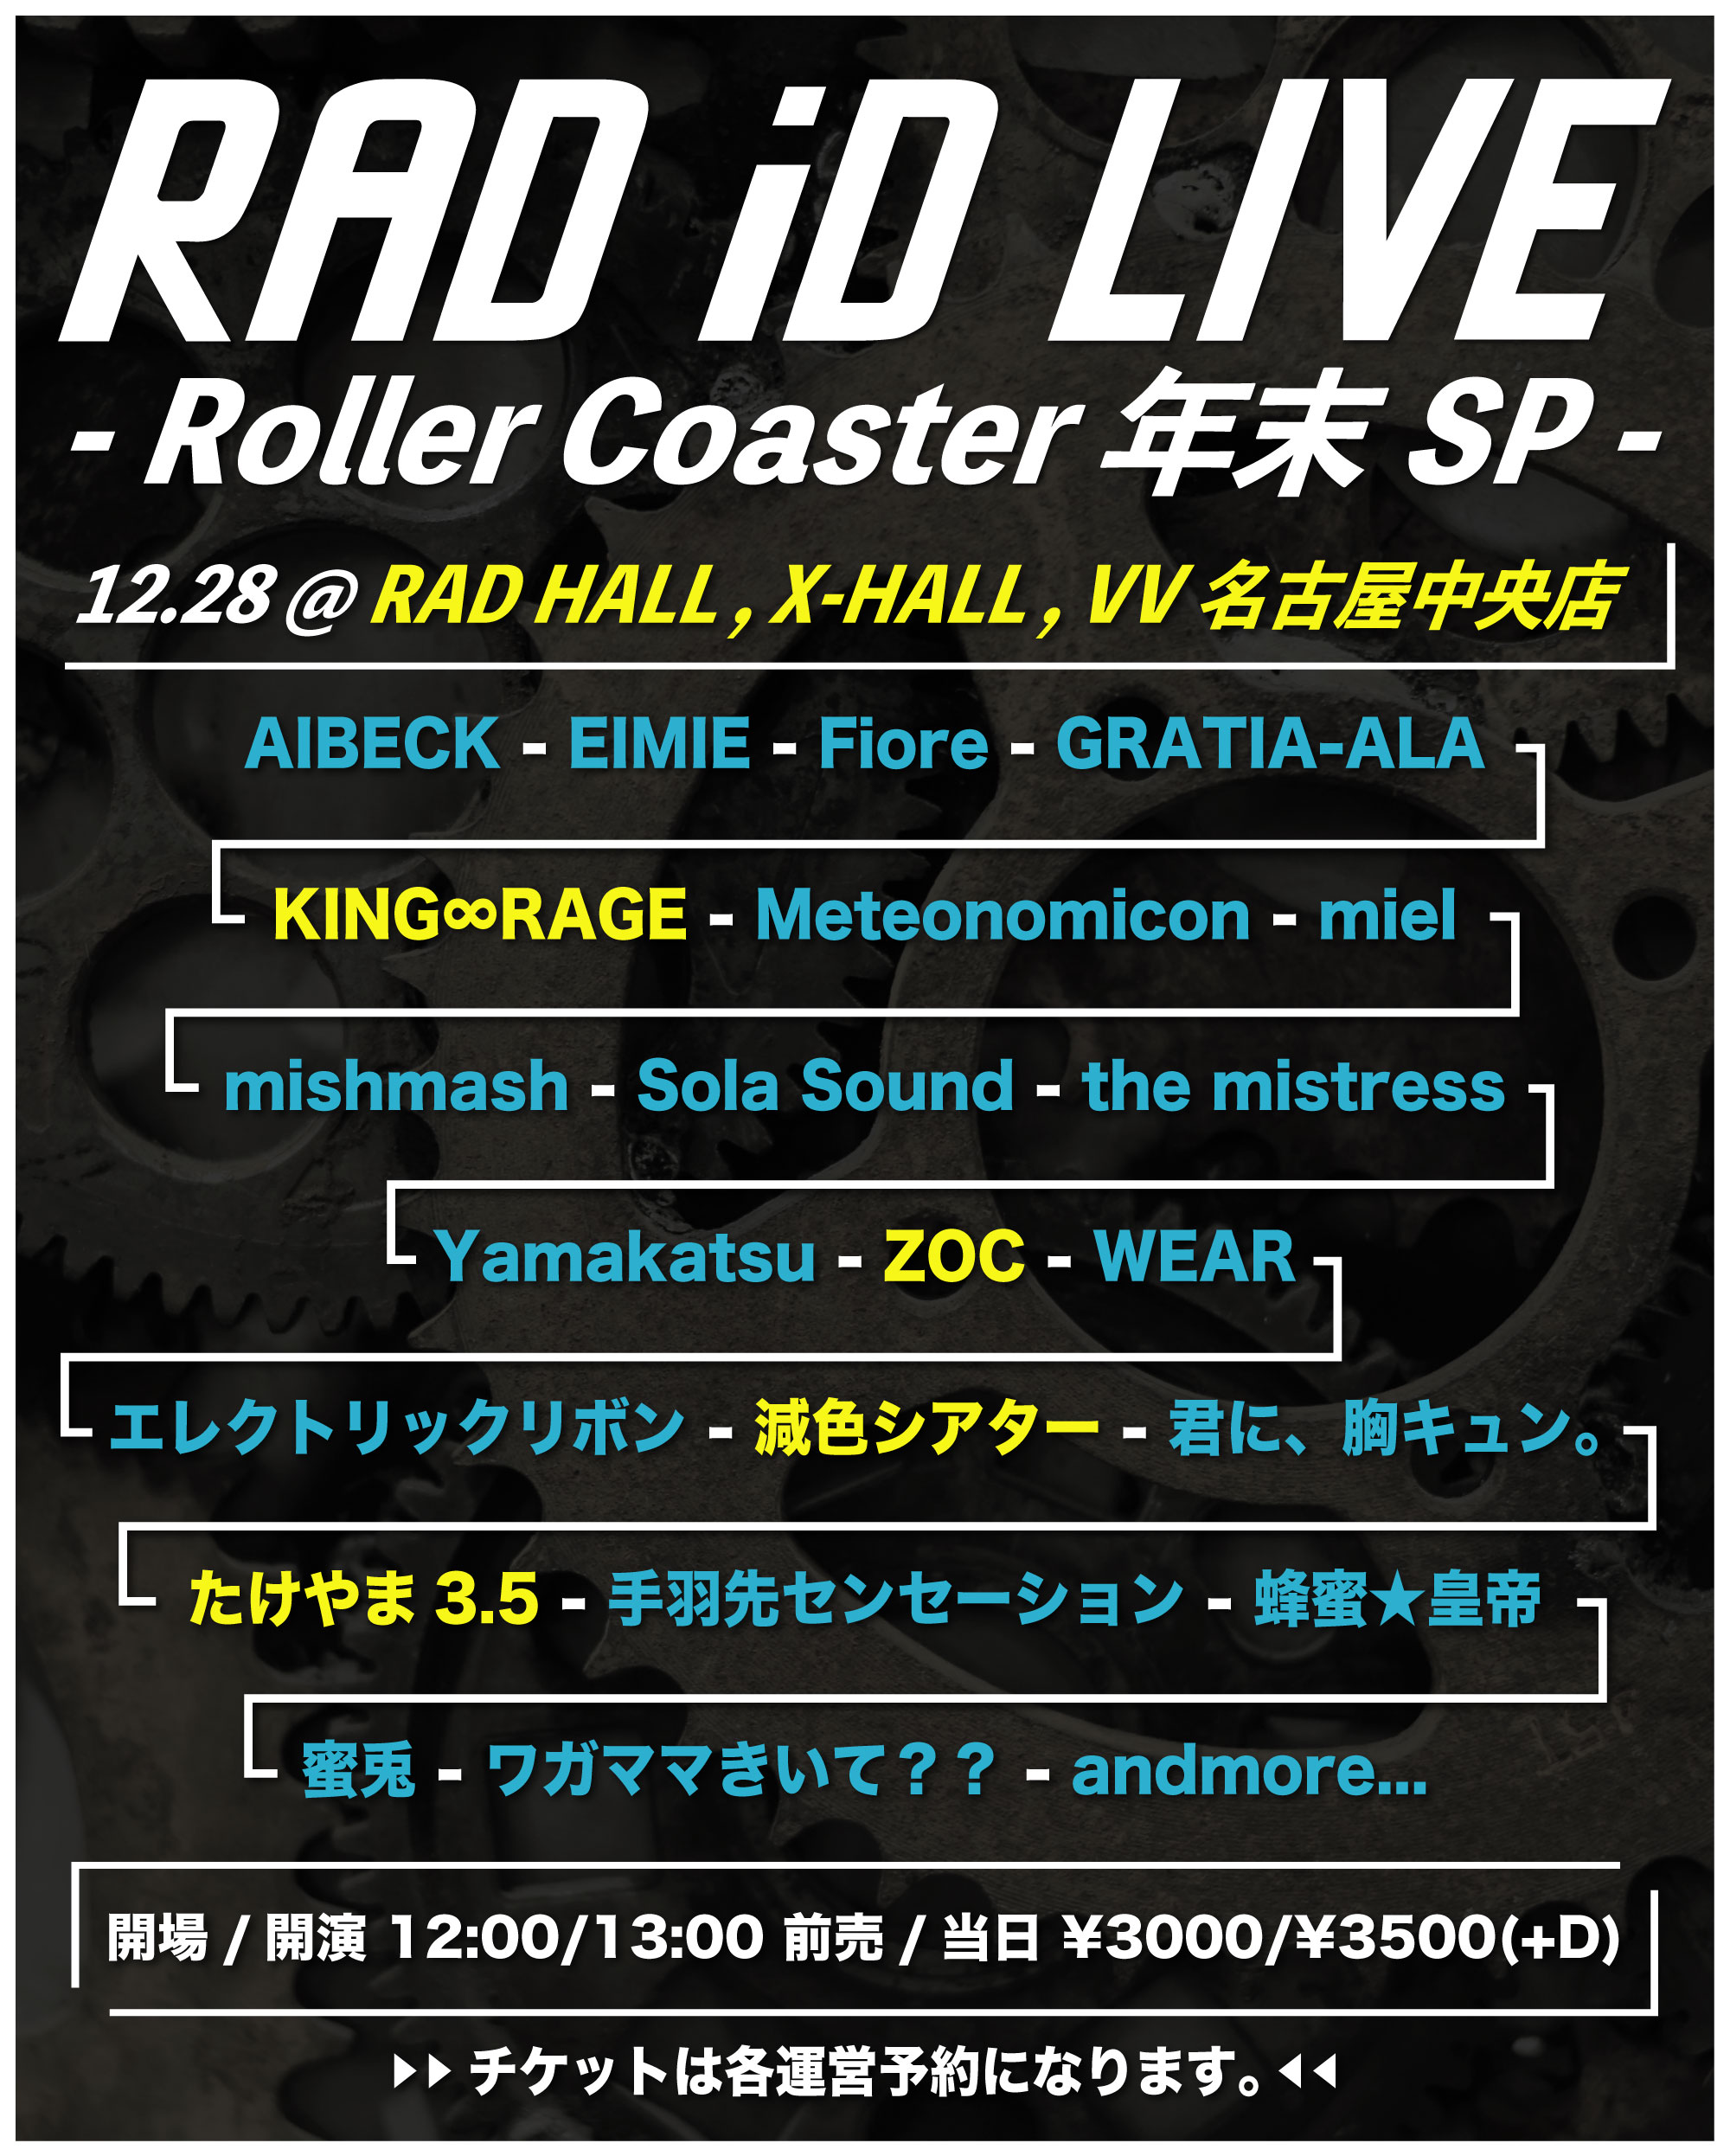 RAD iD LIVE -Roller Coaster 年末SP-